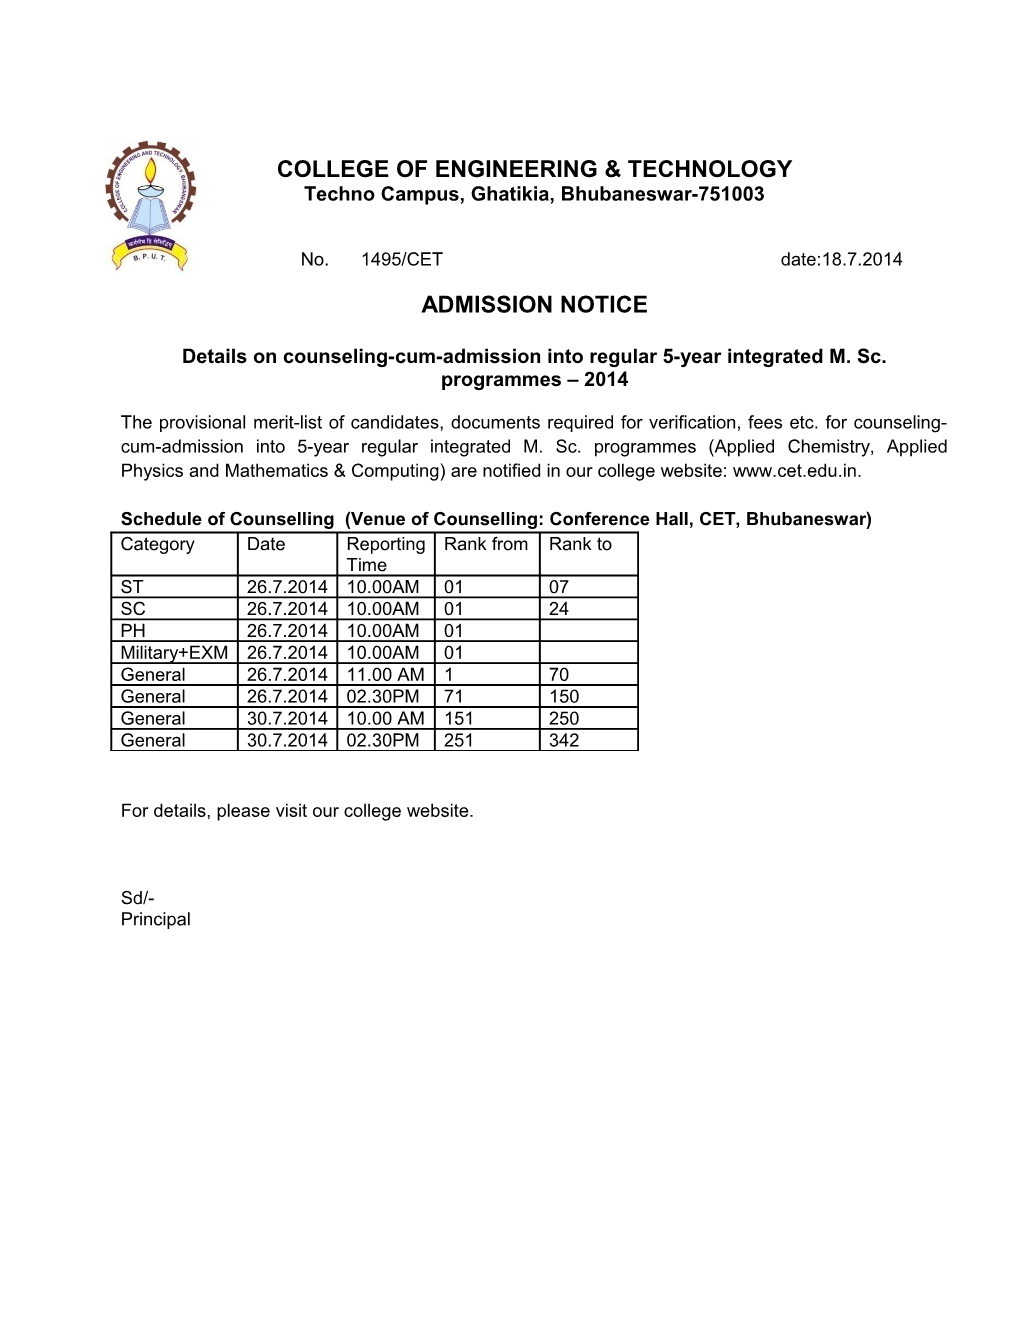 Techno Campus, Ghatikia, Bhubaneswar-751003